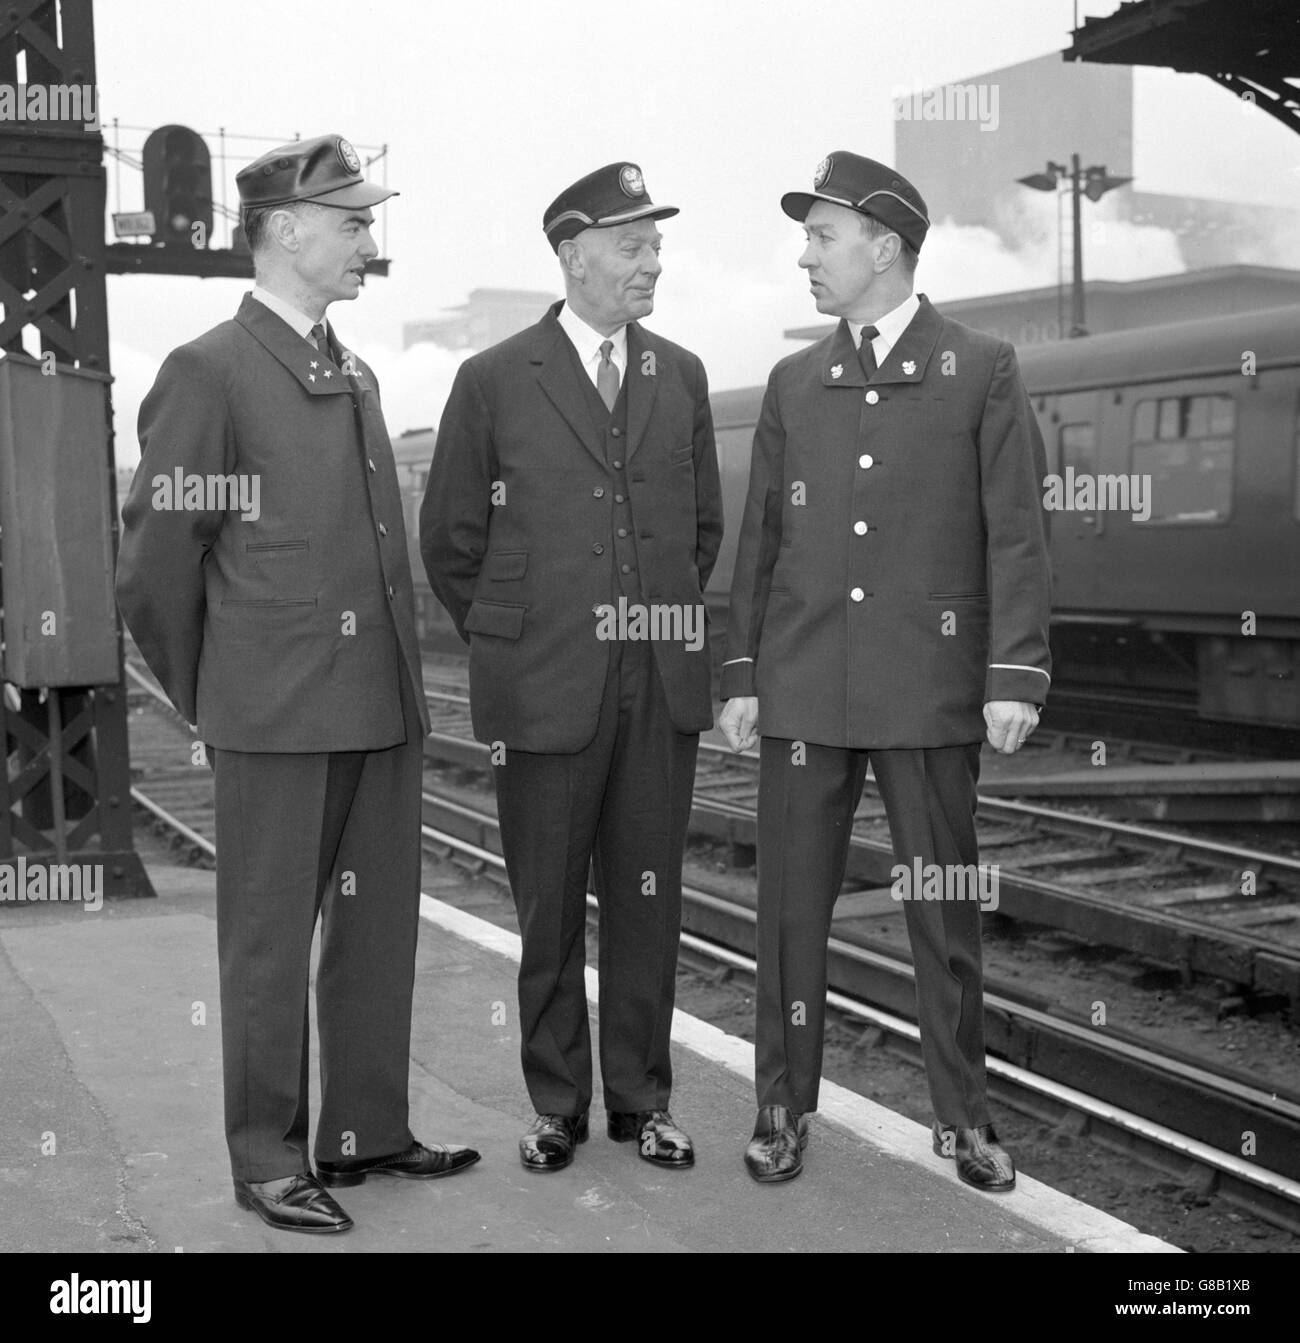 Transport - British Rail Uniforms Stock Photo - Alamy